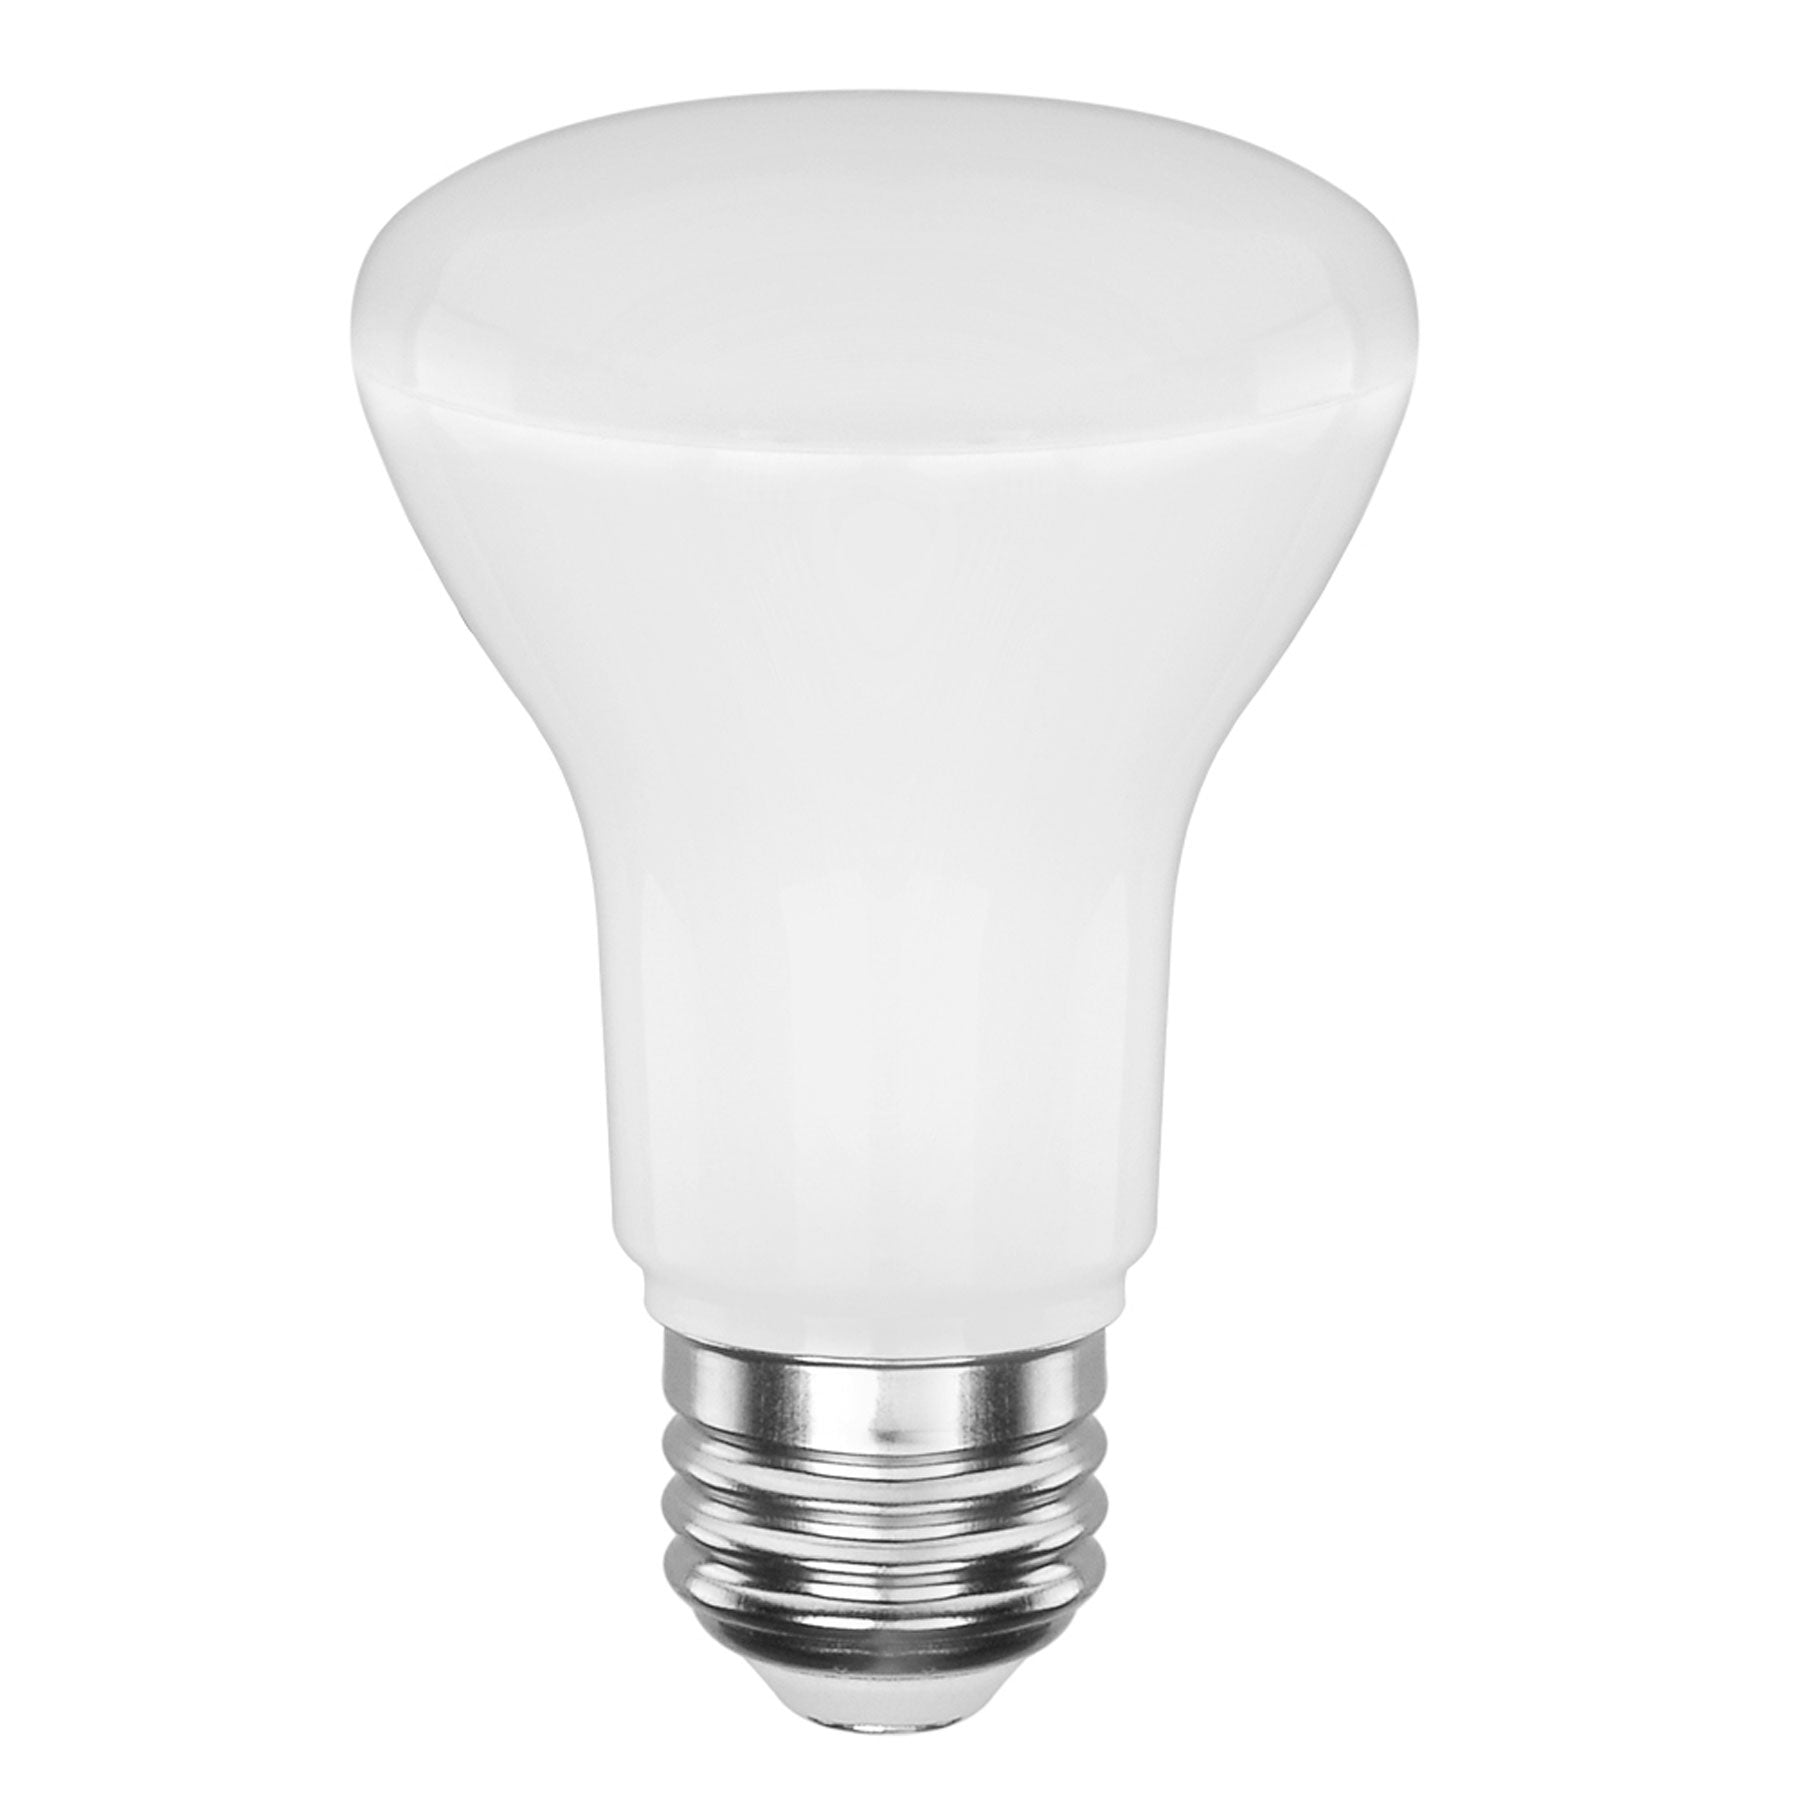 LED light spots and light bulbs